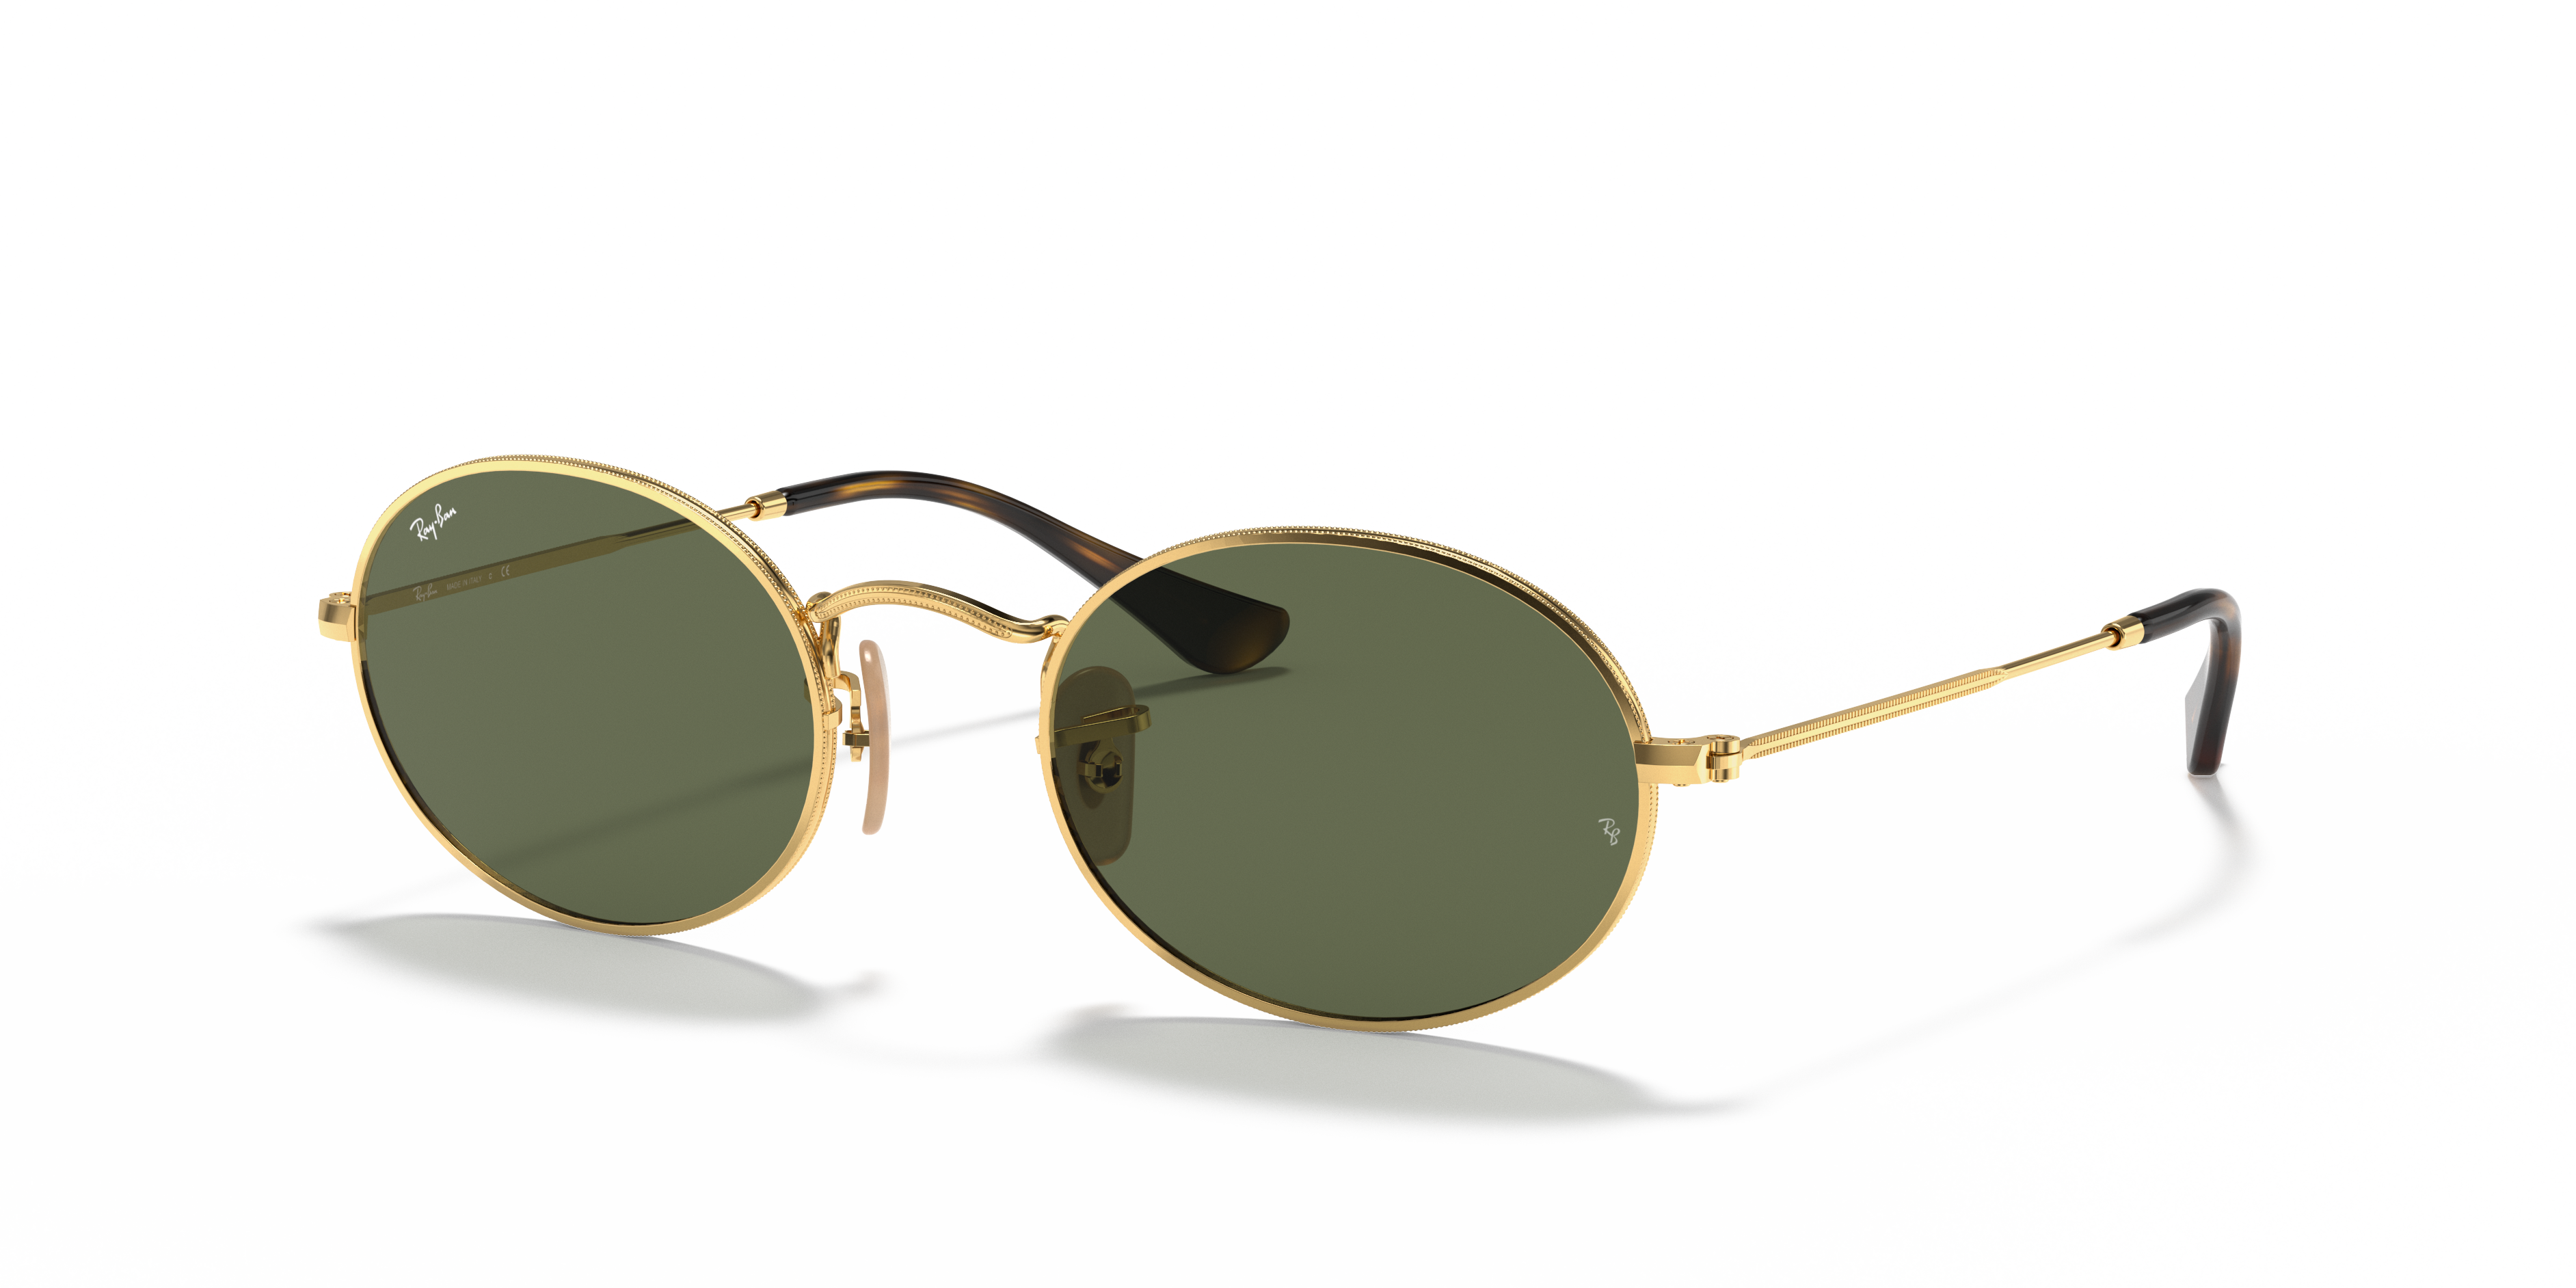 Accessoires Zonnebrillen Ovale zonnebrillen Ray Ban Ovale zonnebril volledige print casual uitstraling 